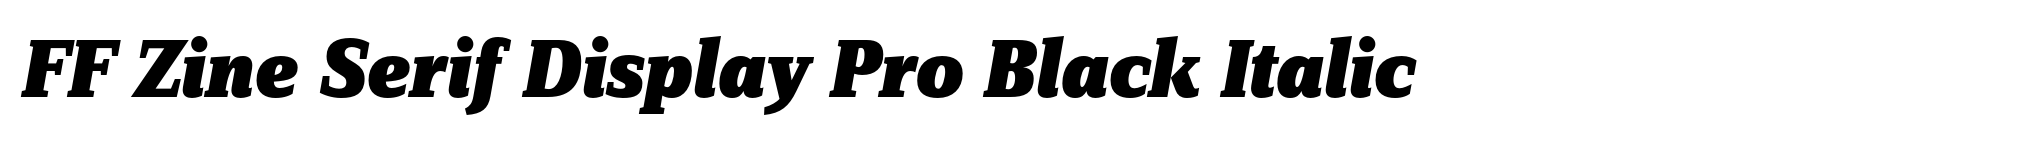 FF Zine Serif Display Pro Black Italic image